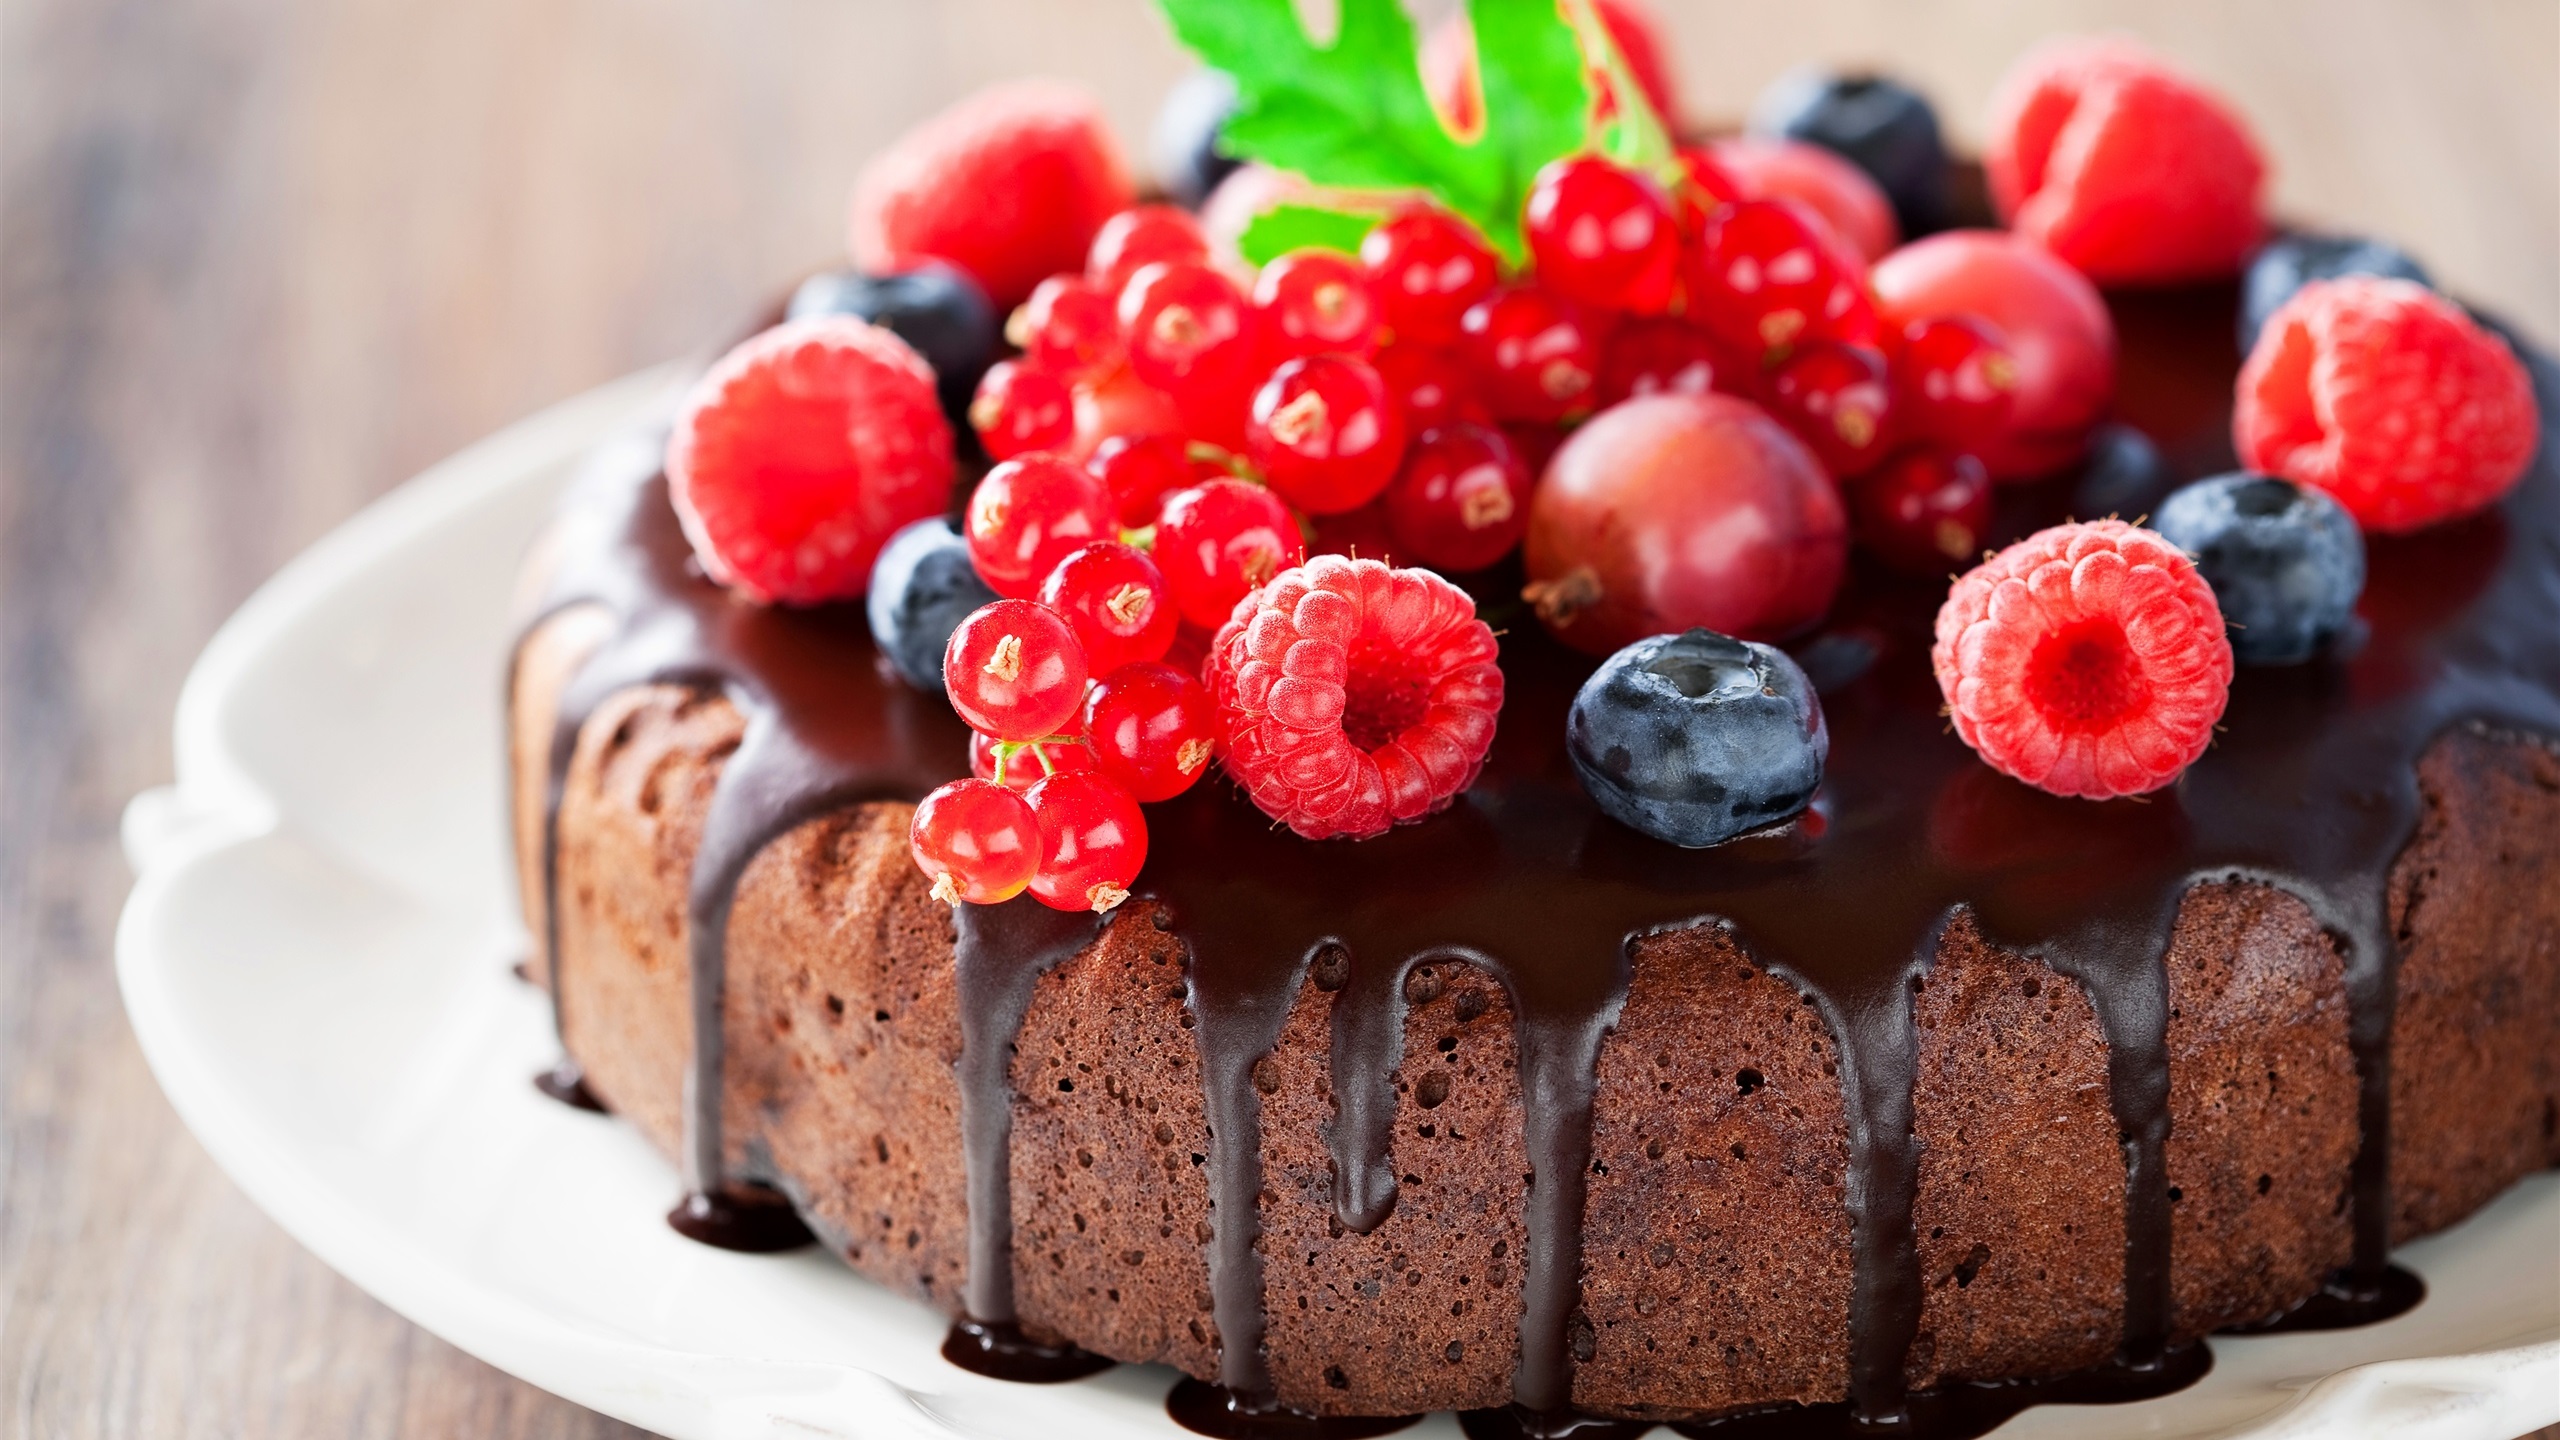 Chocolate Cake Berries Plates Food Dessert Sweets Blueberries Raspberries Red Currant Chocolate 2560x1440